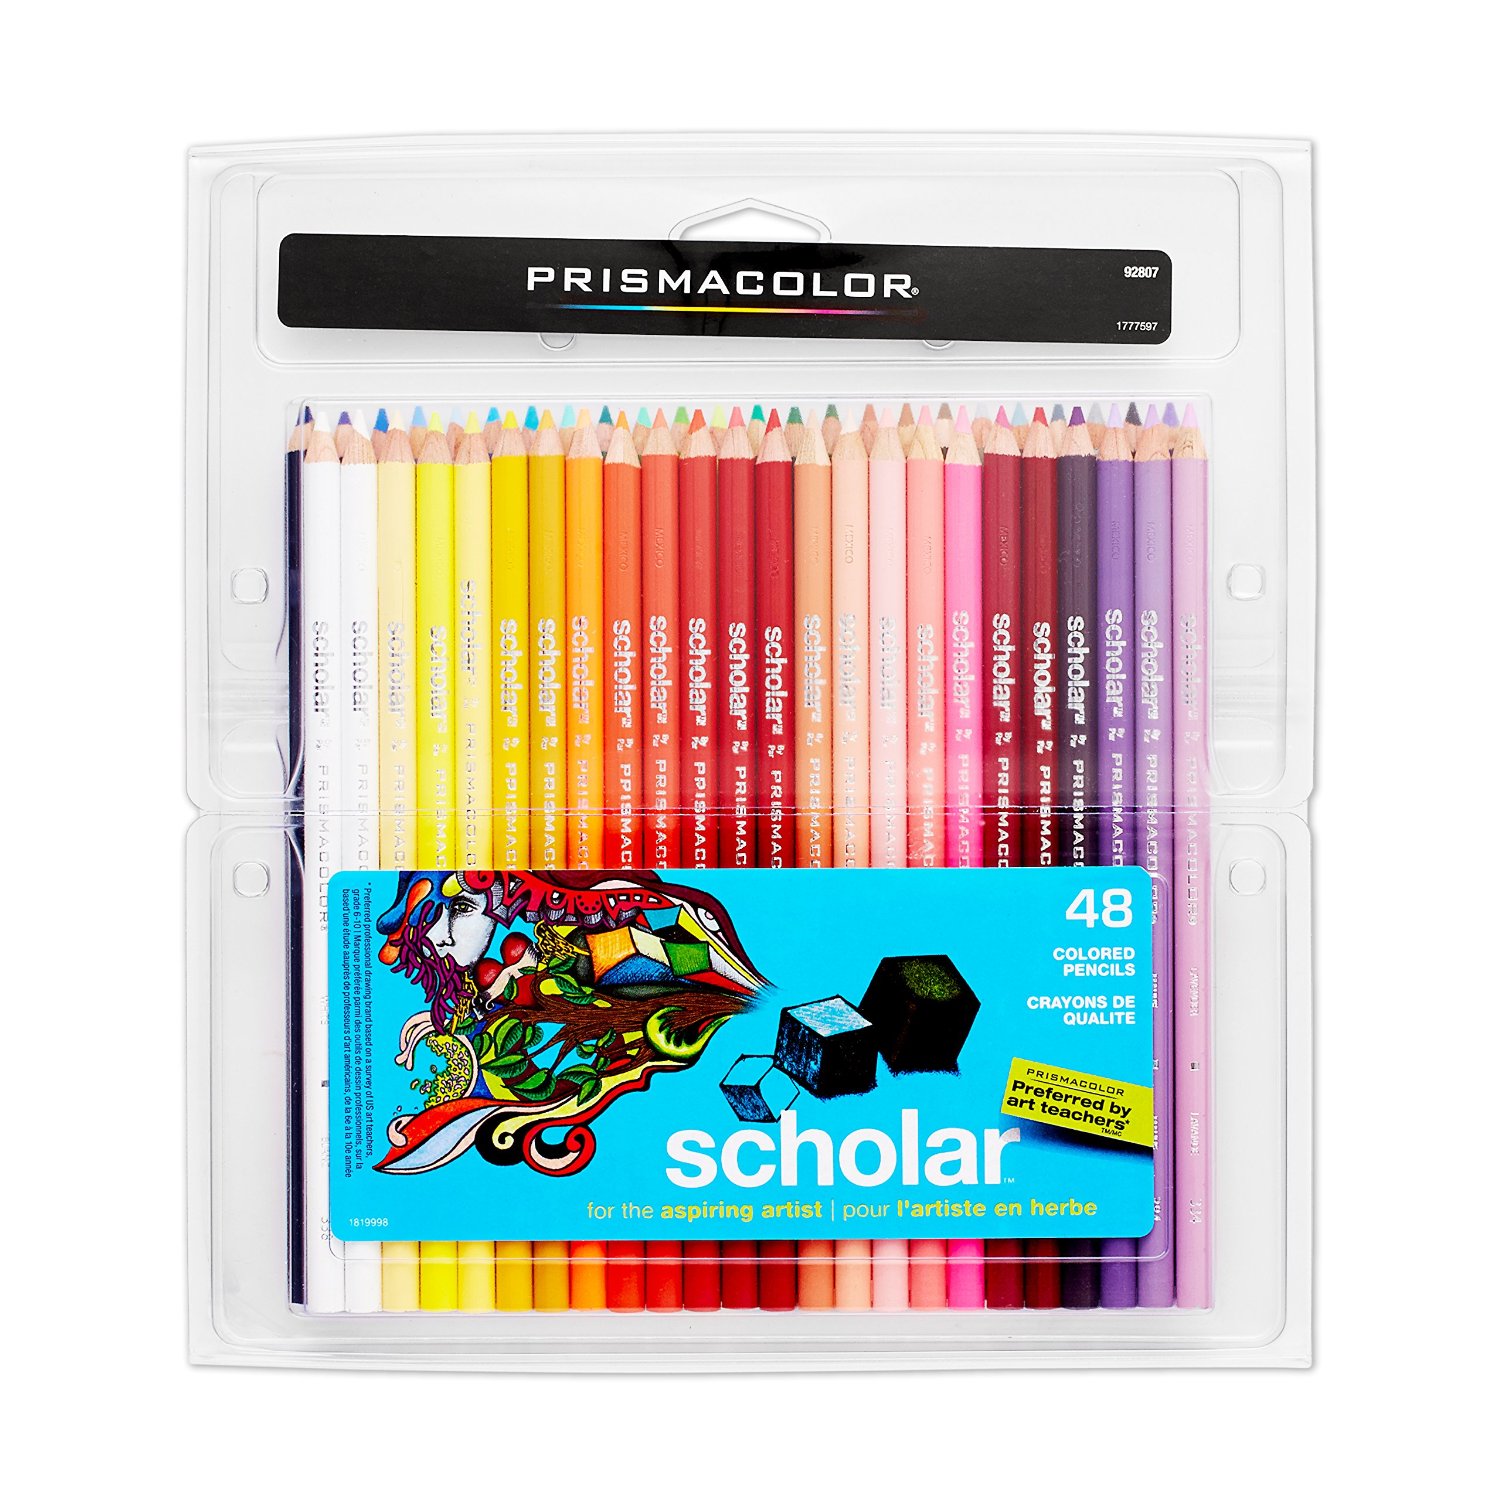 Prismacolor Scholar Colored Pencils, 48 Pack – Just $13.00! School Supply Item!